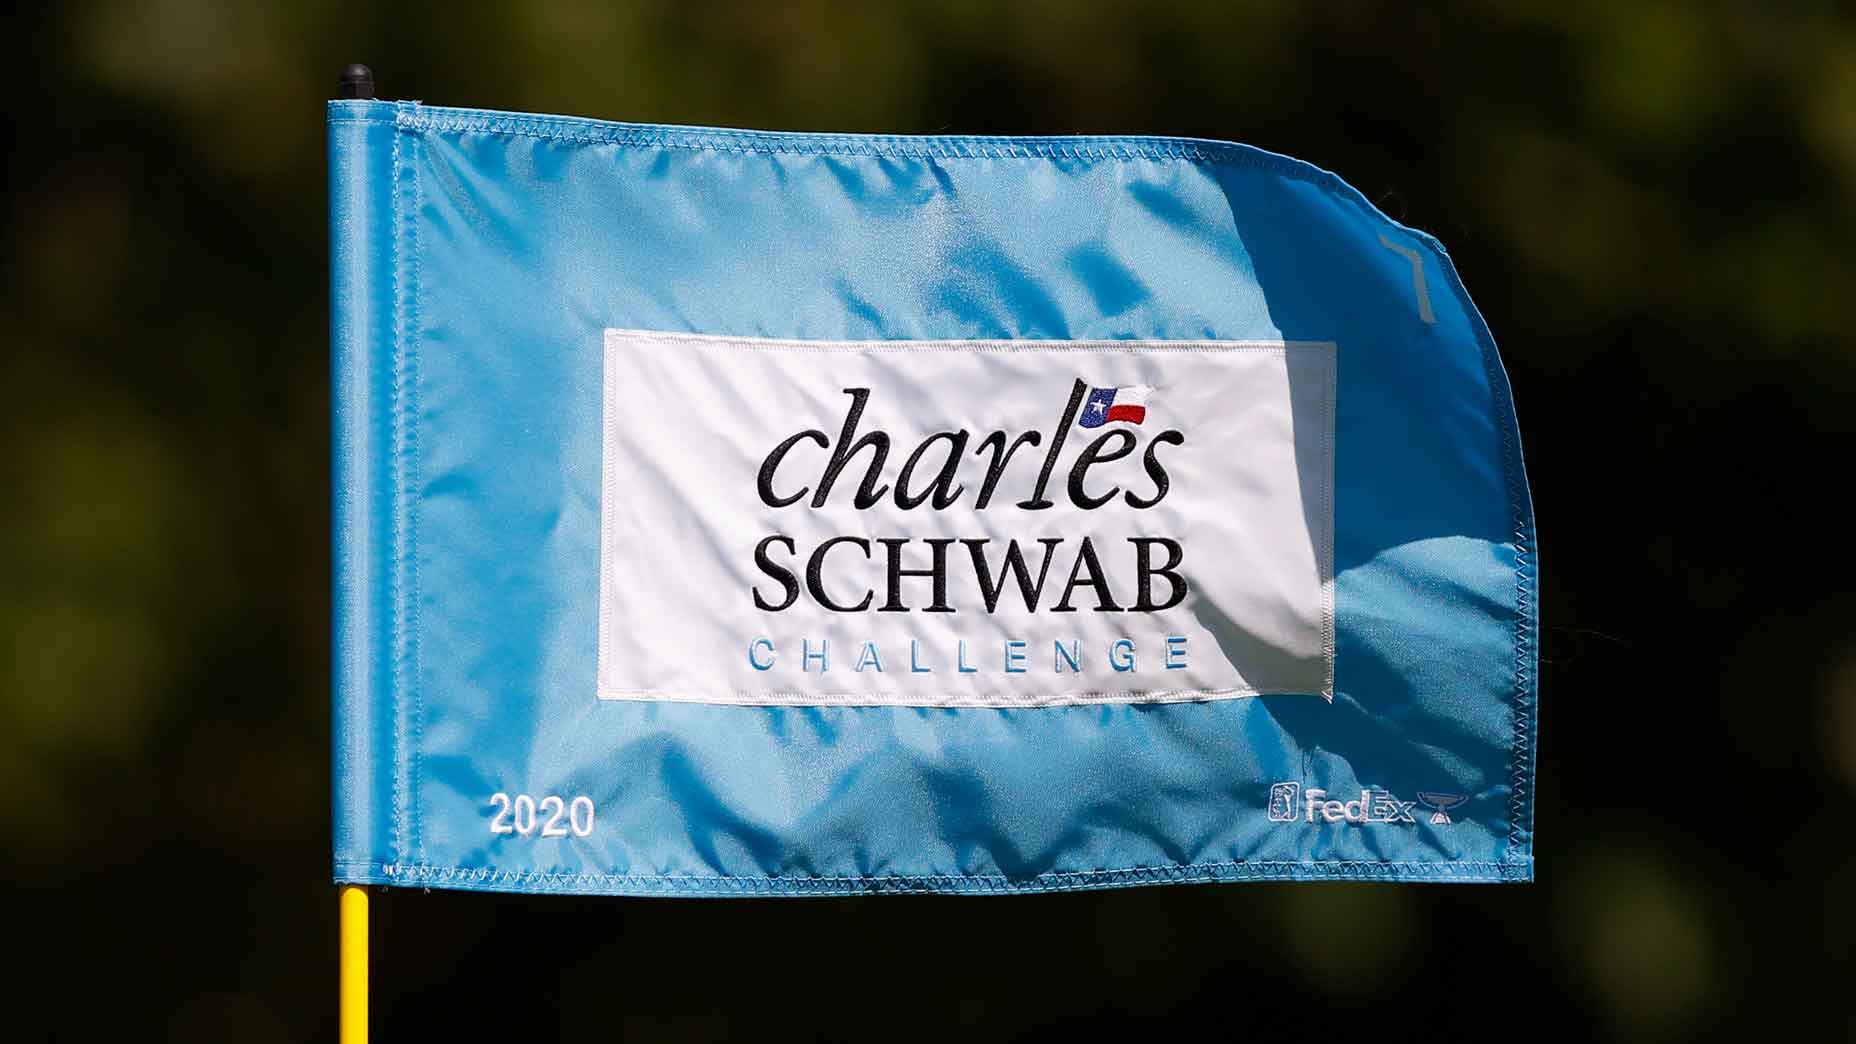 2020 Charles Schwab Challenge What channel is airing PGA Tour return?